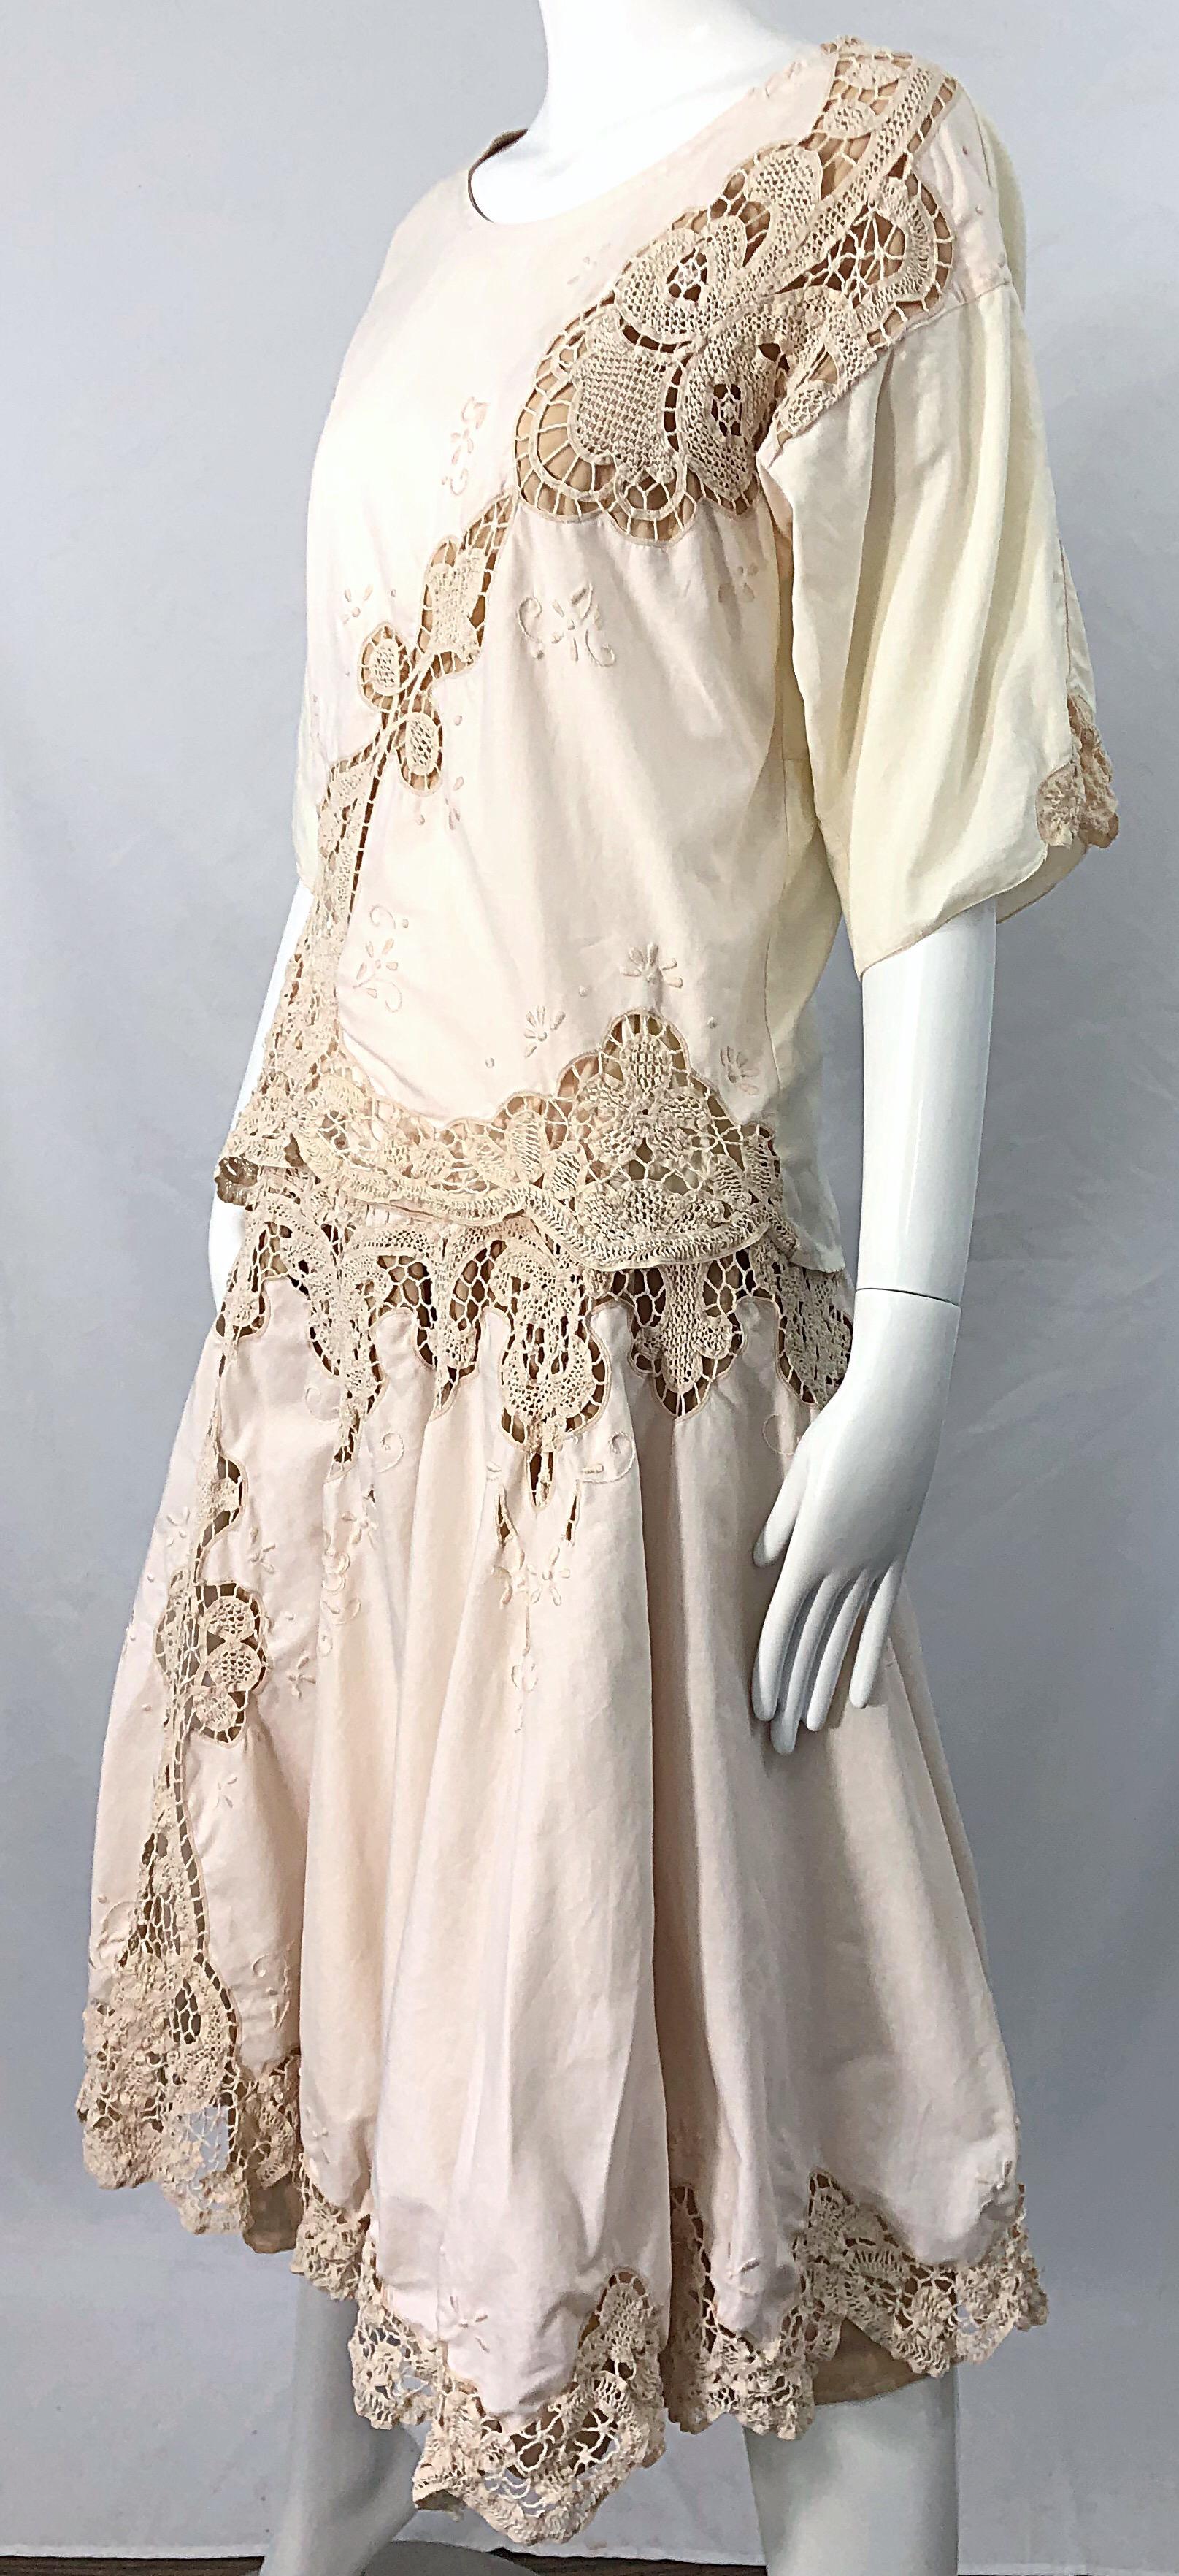 1980s Ivory Cotton Crochet Boho Shirt / Skirt Vintage 80s Dress Ensemble Set 5